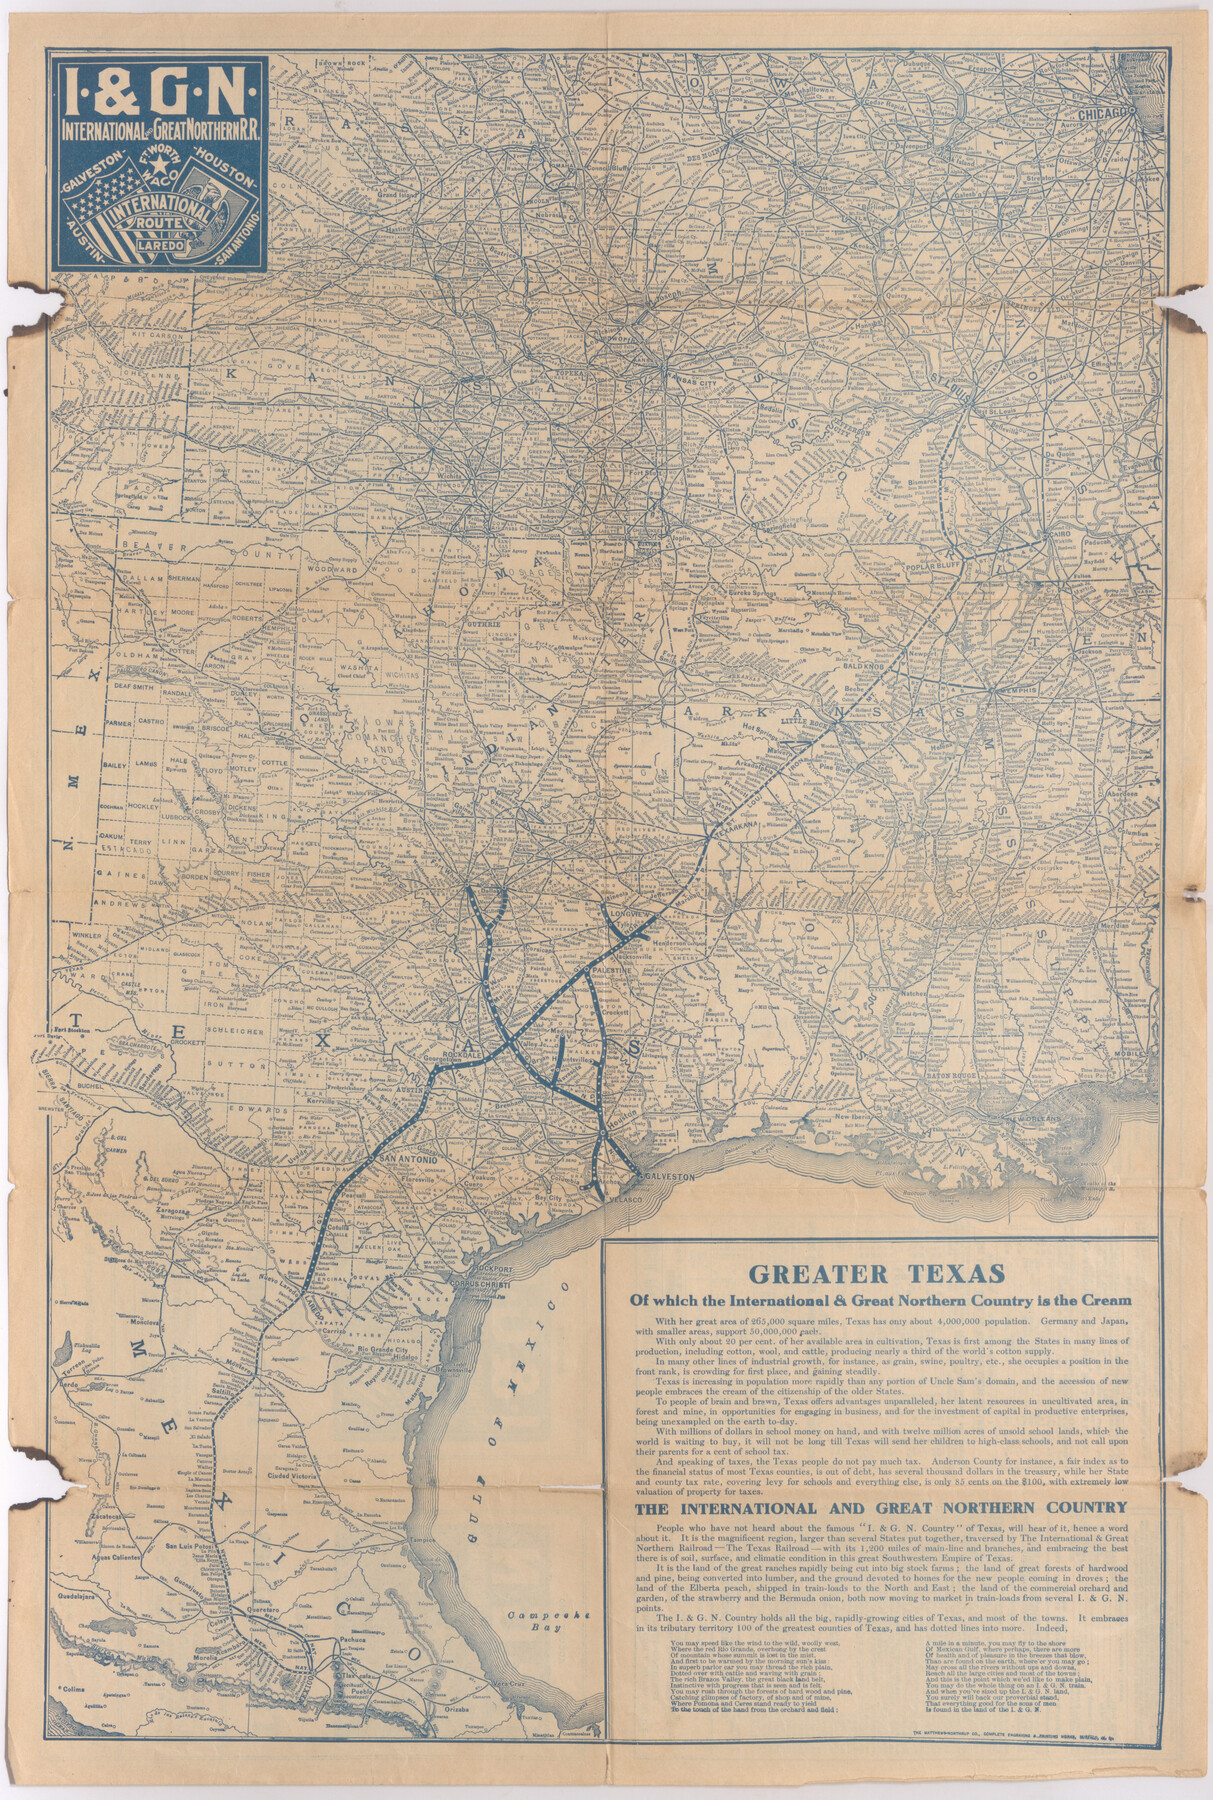 95779, I. & G. N. - International and Great Northern R.R. - International Route - Galveston, Ft. Worth, Waco, Houston, Austin, Laredo, San Antonio, Cobb Digital Map Collection - 1